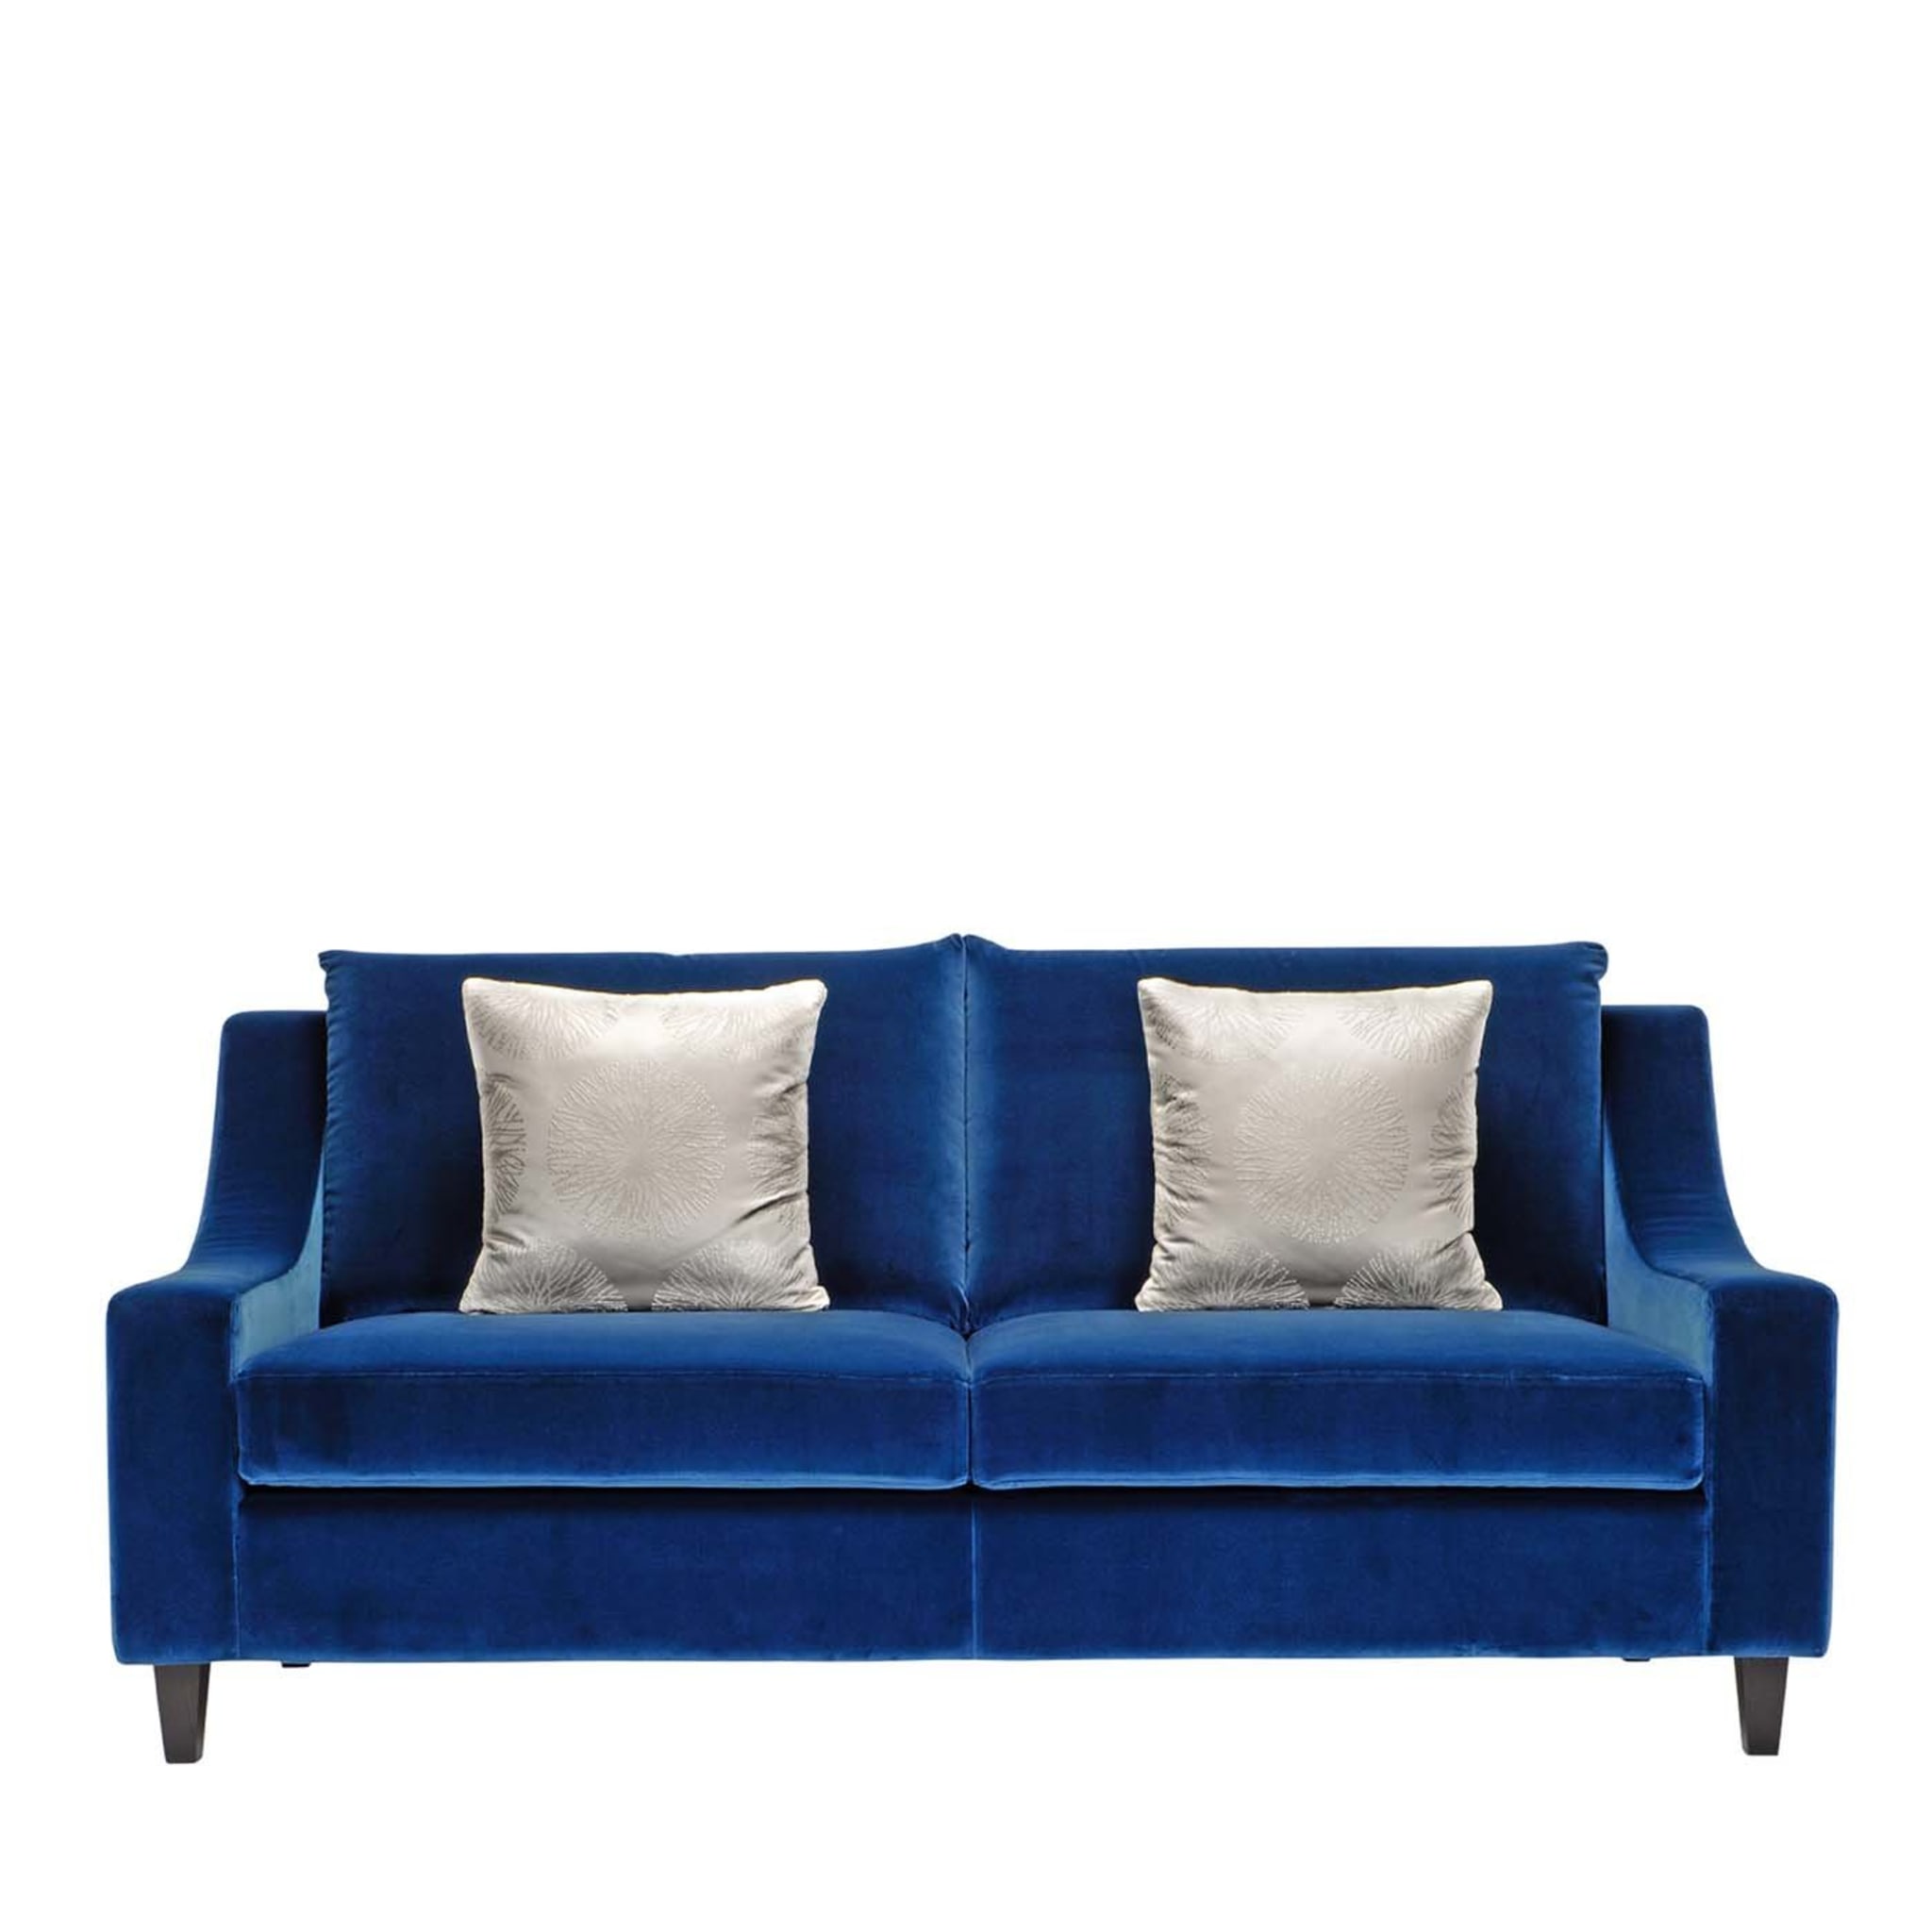 St108 Cobalt Blue Sofa - Main view